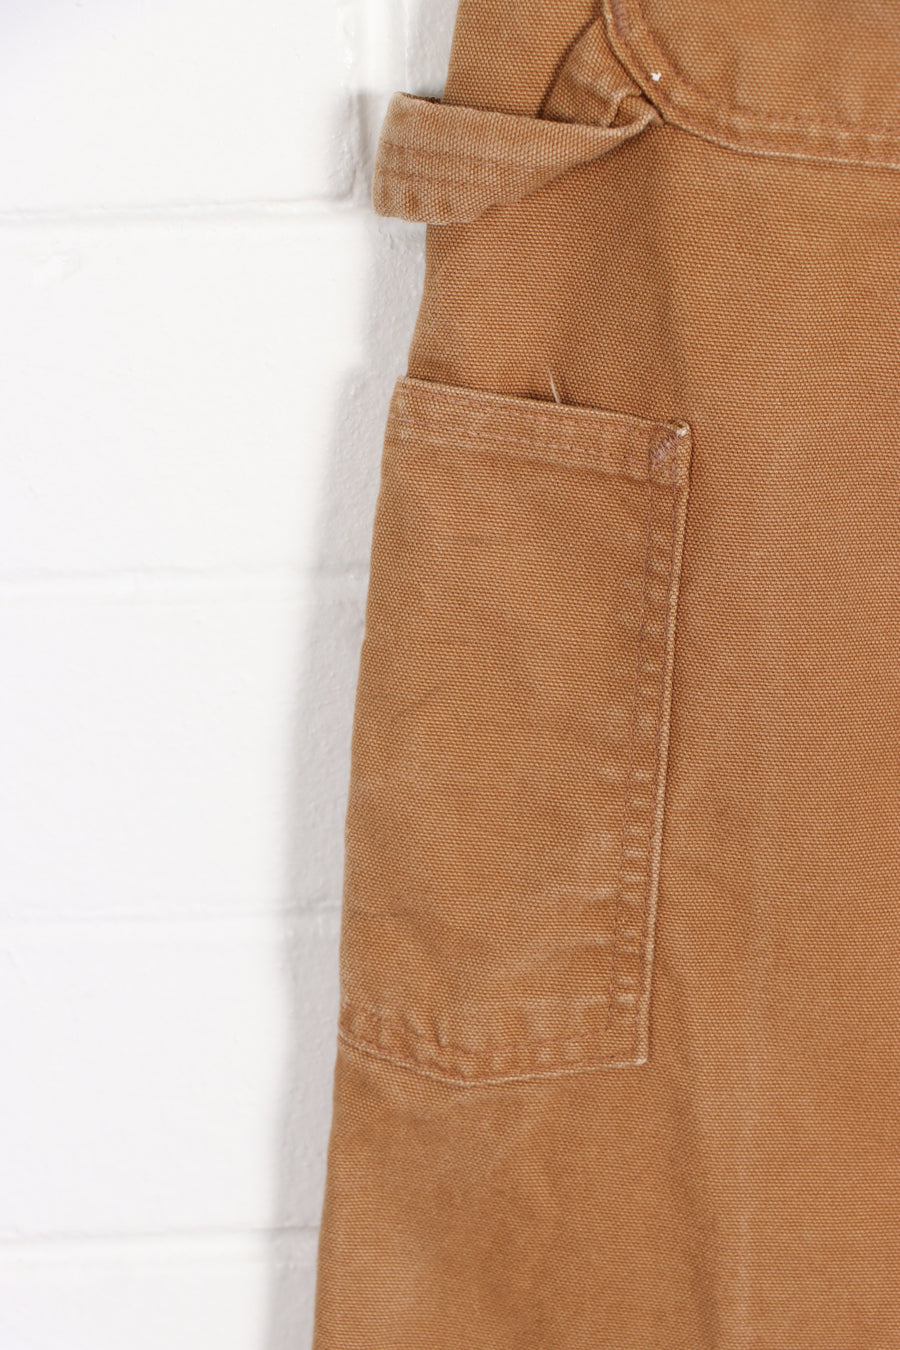 CARHARTT Tawny Brown Carpenter Workwear Pants (32x30) - Vintage Sole Melbourne